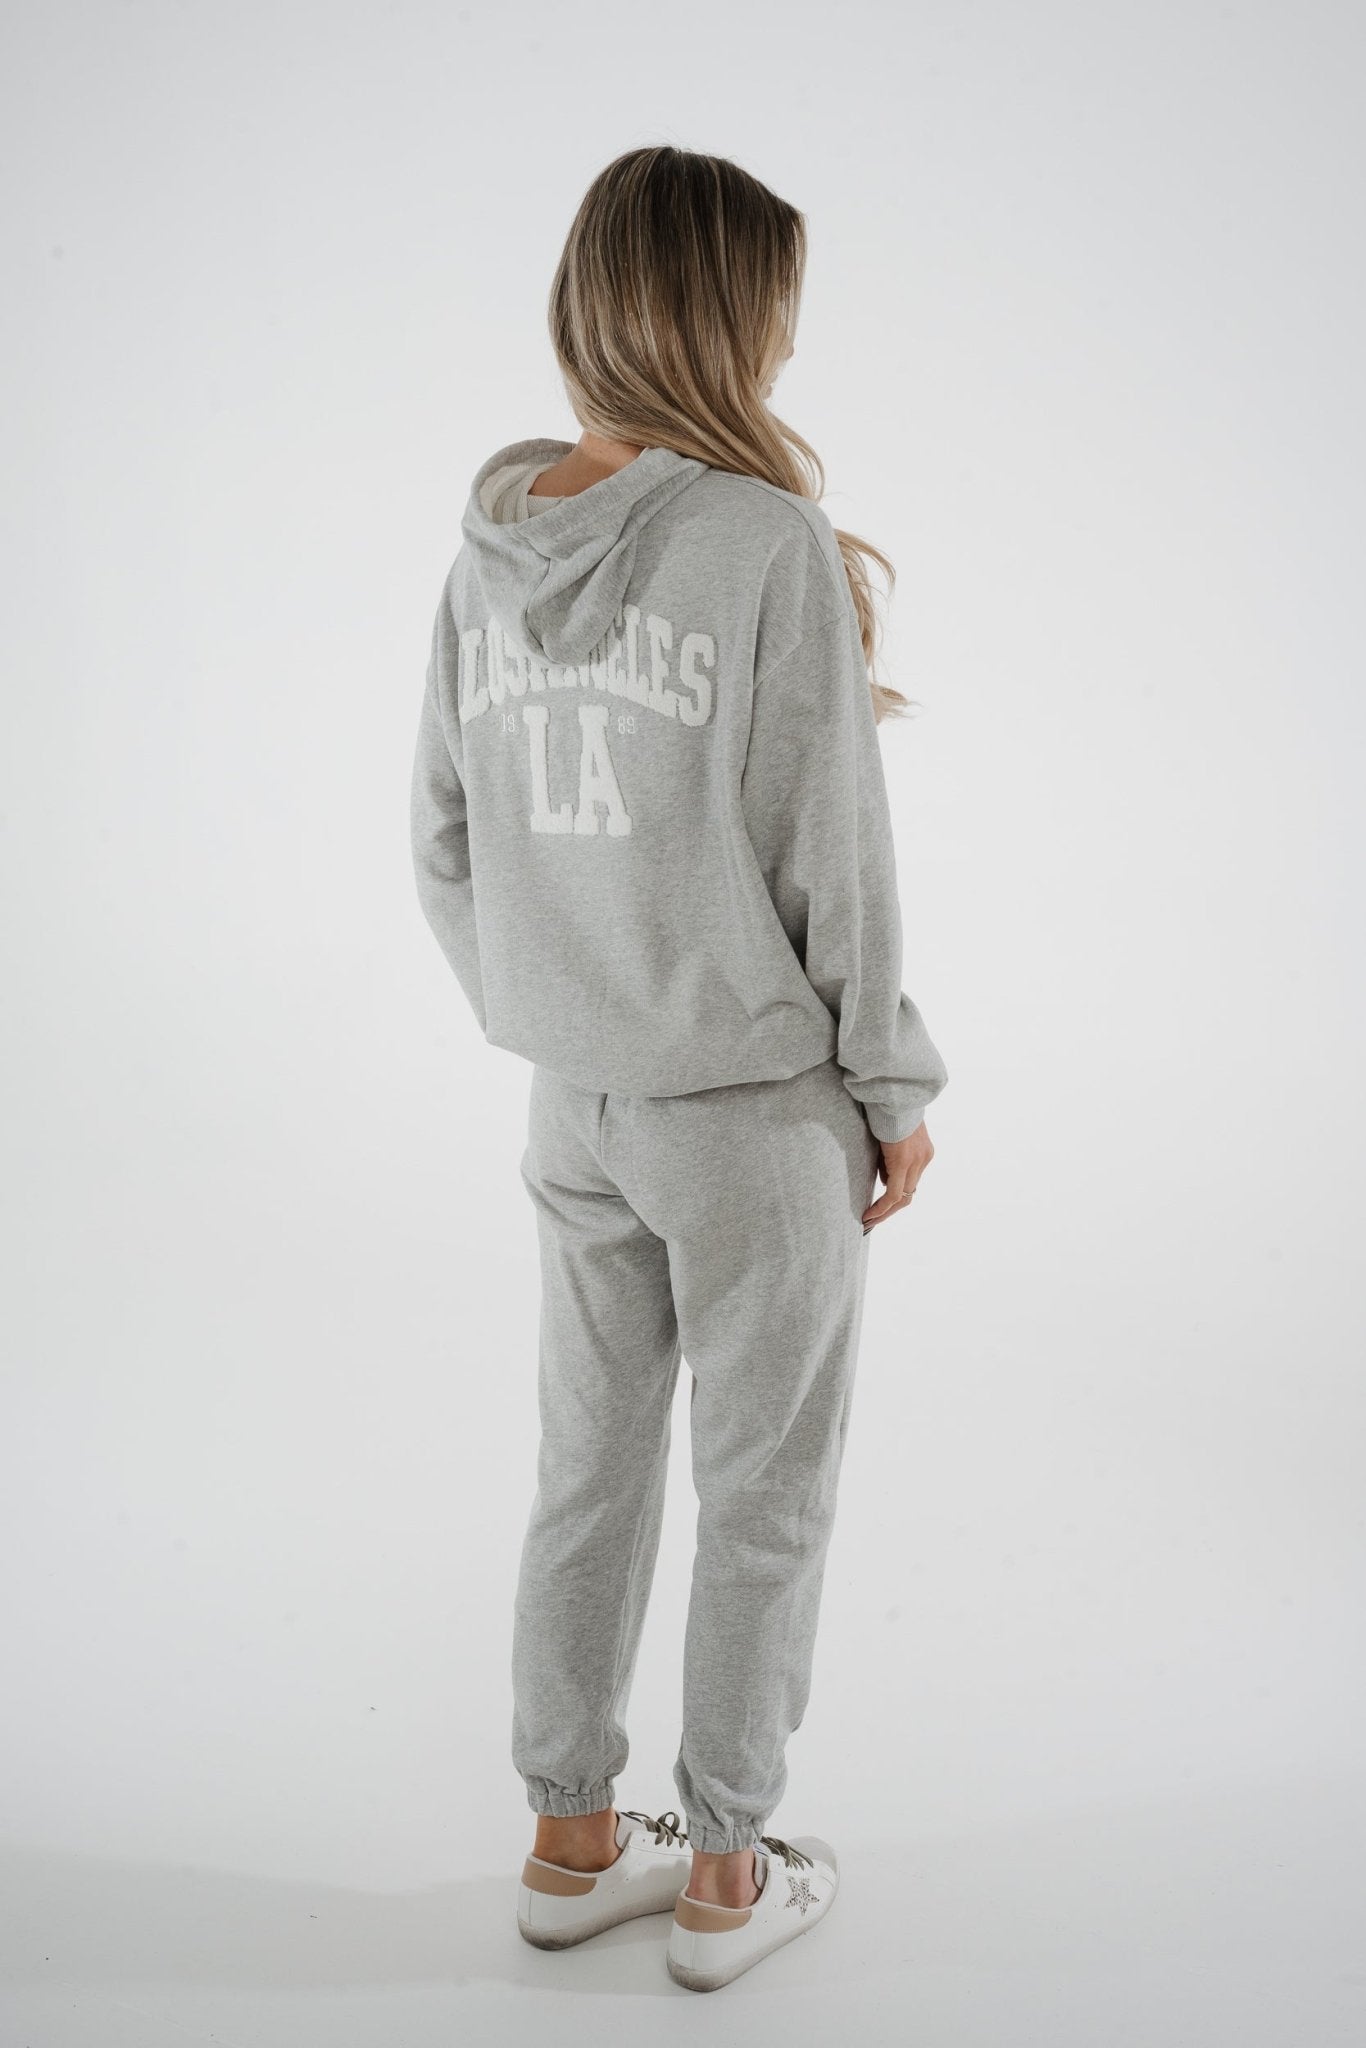 Millie Slogan Joggers In Grey - The Walk in Wardrobe